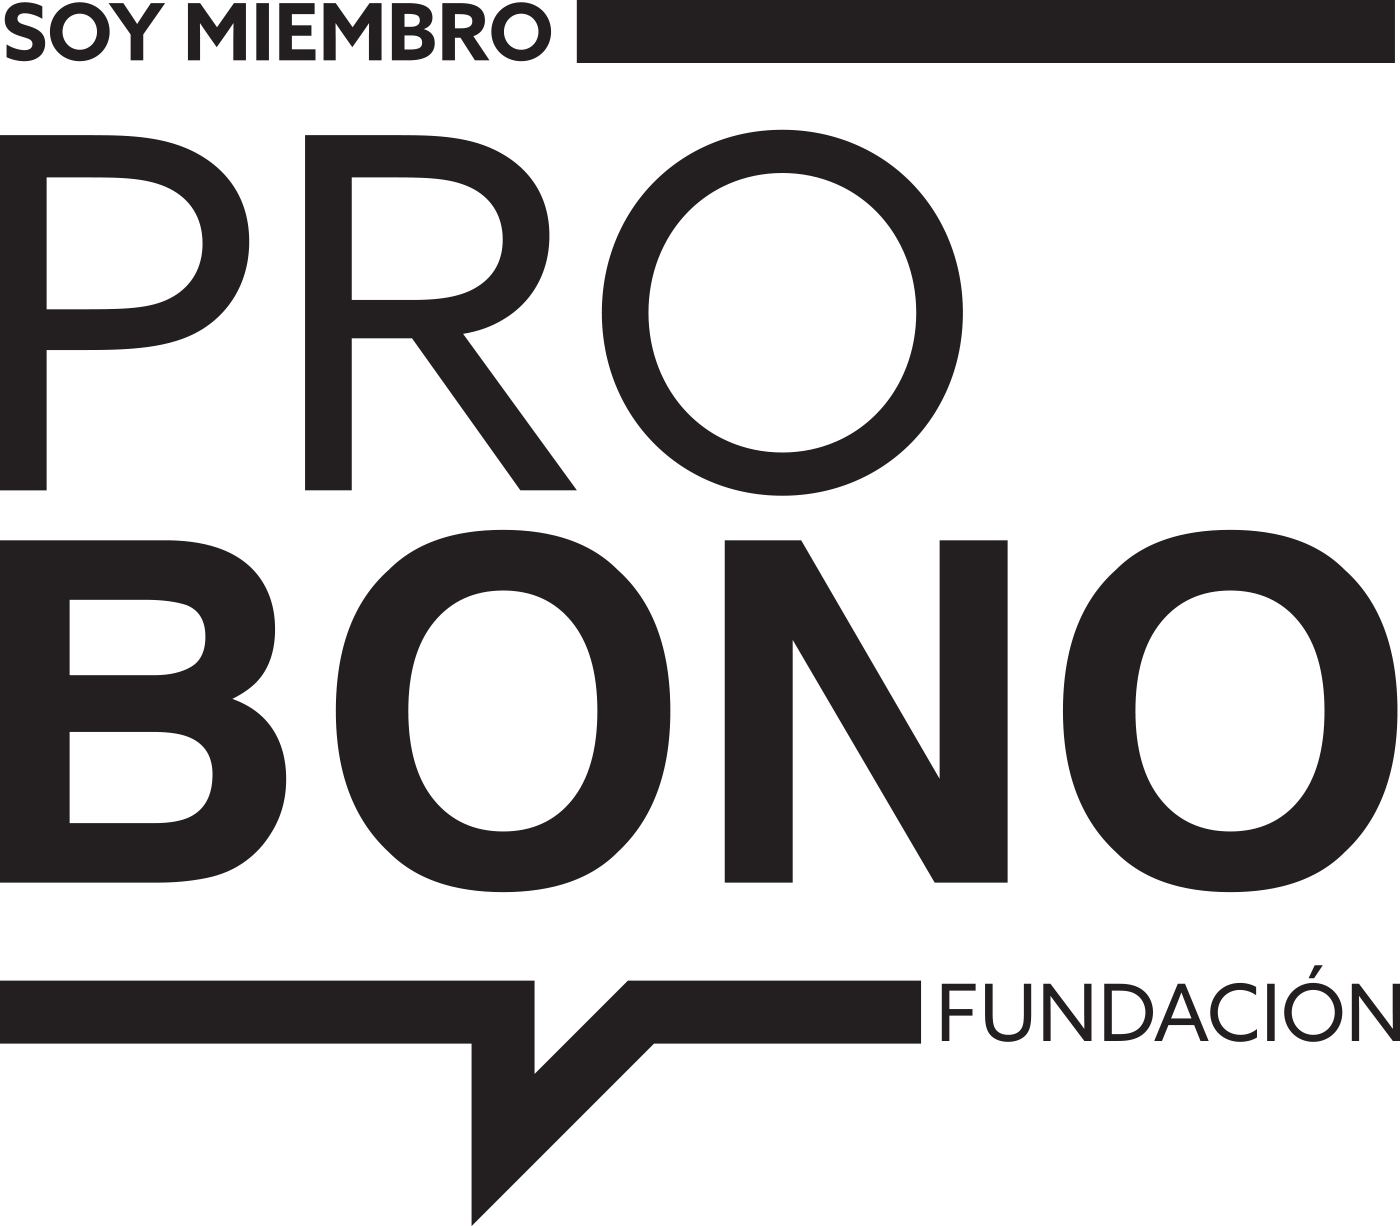 Logotipo pro bono